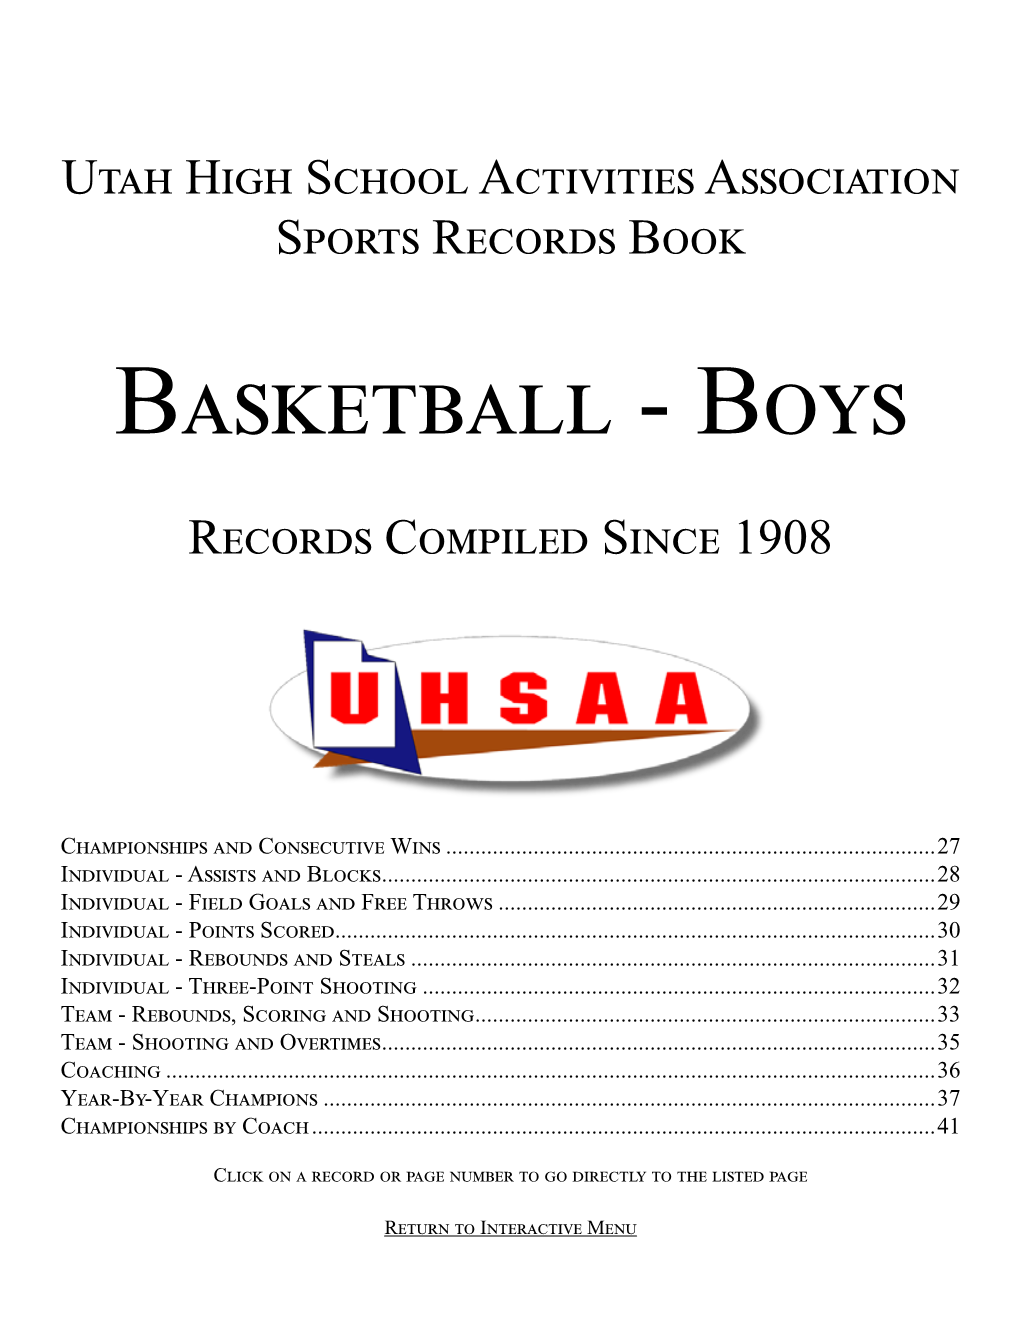 Utah High School Activities Association Sports Records Book Basketball - Boys